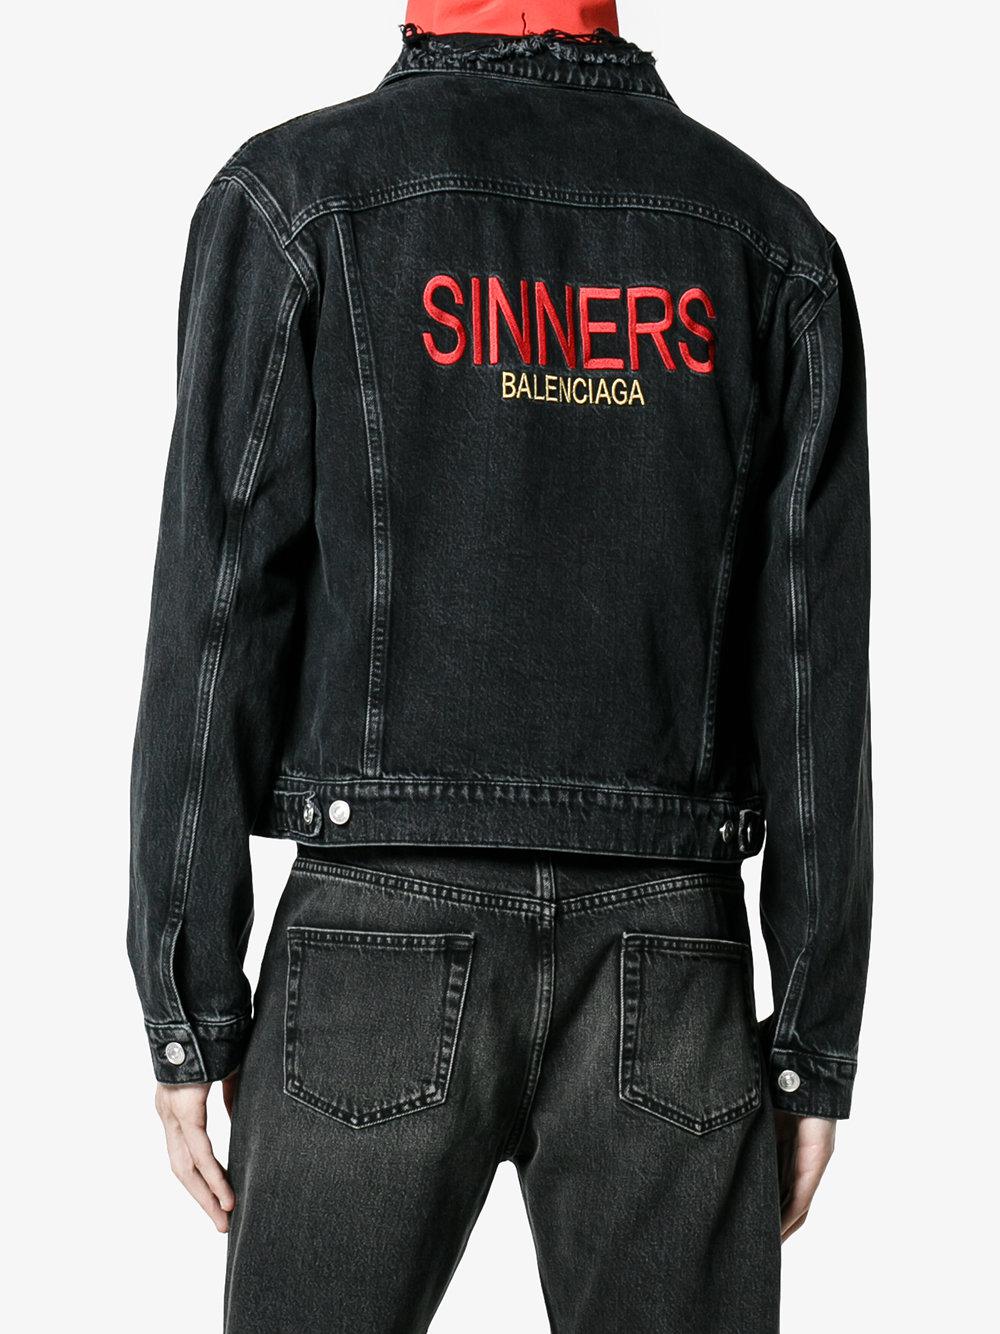 Balenciaga Sinners Denim Jacket in Black for Men | Lyst